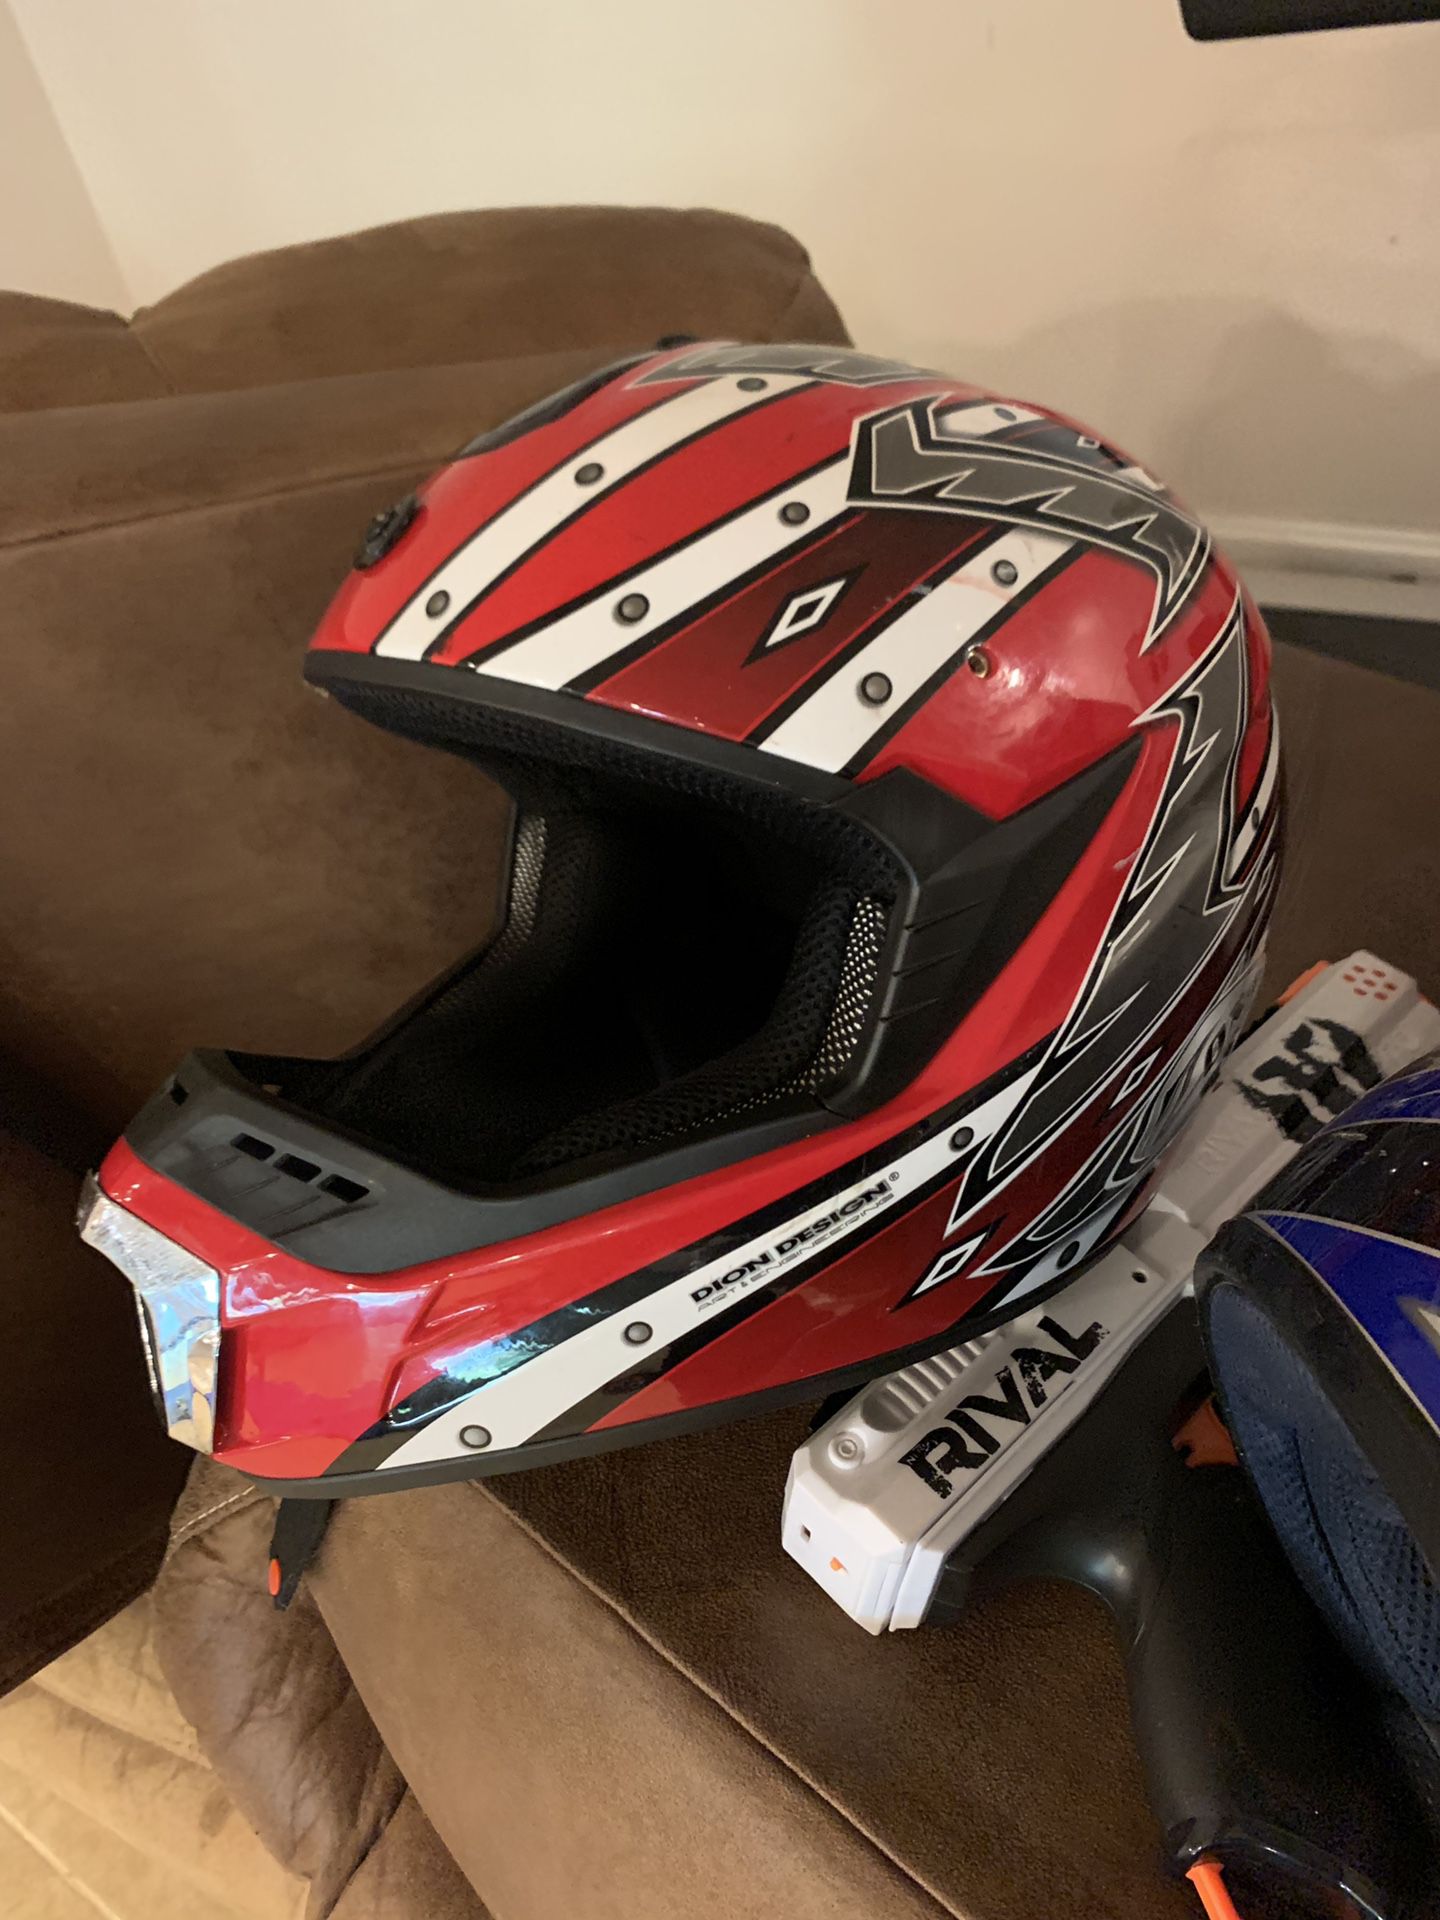 Small dirt bike helmet